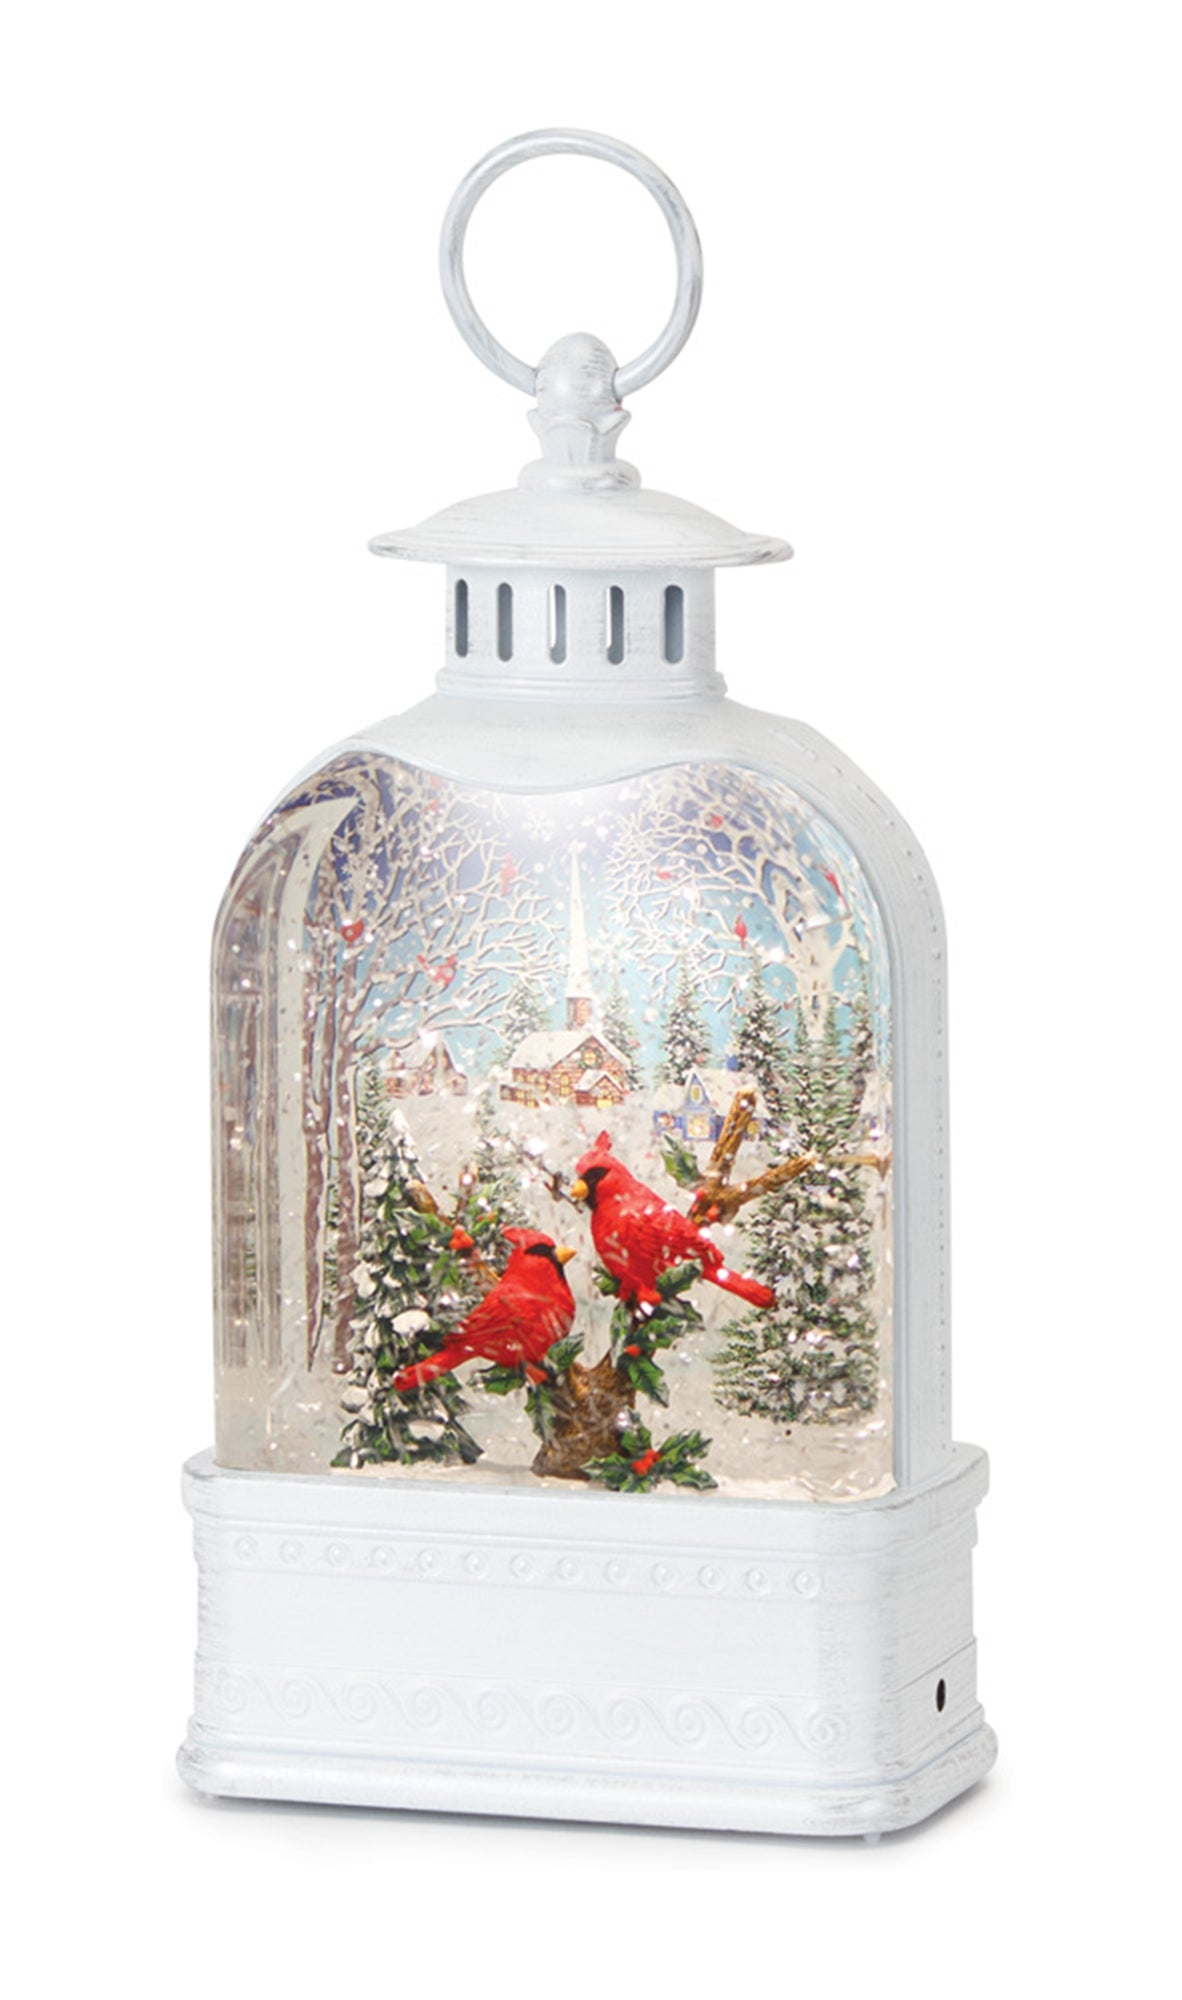 LED Snow Globe Lantern with Cardinal Forest Scene 10.5"H